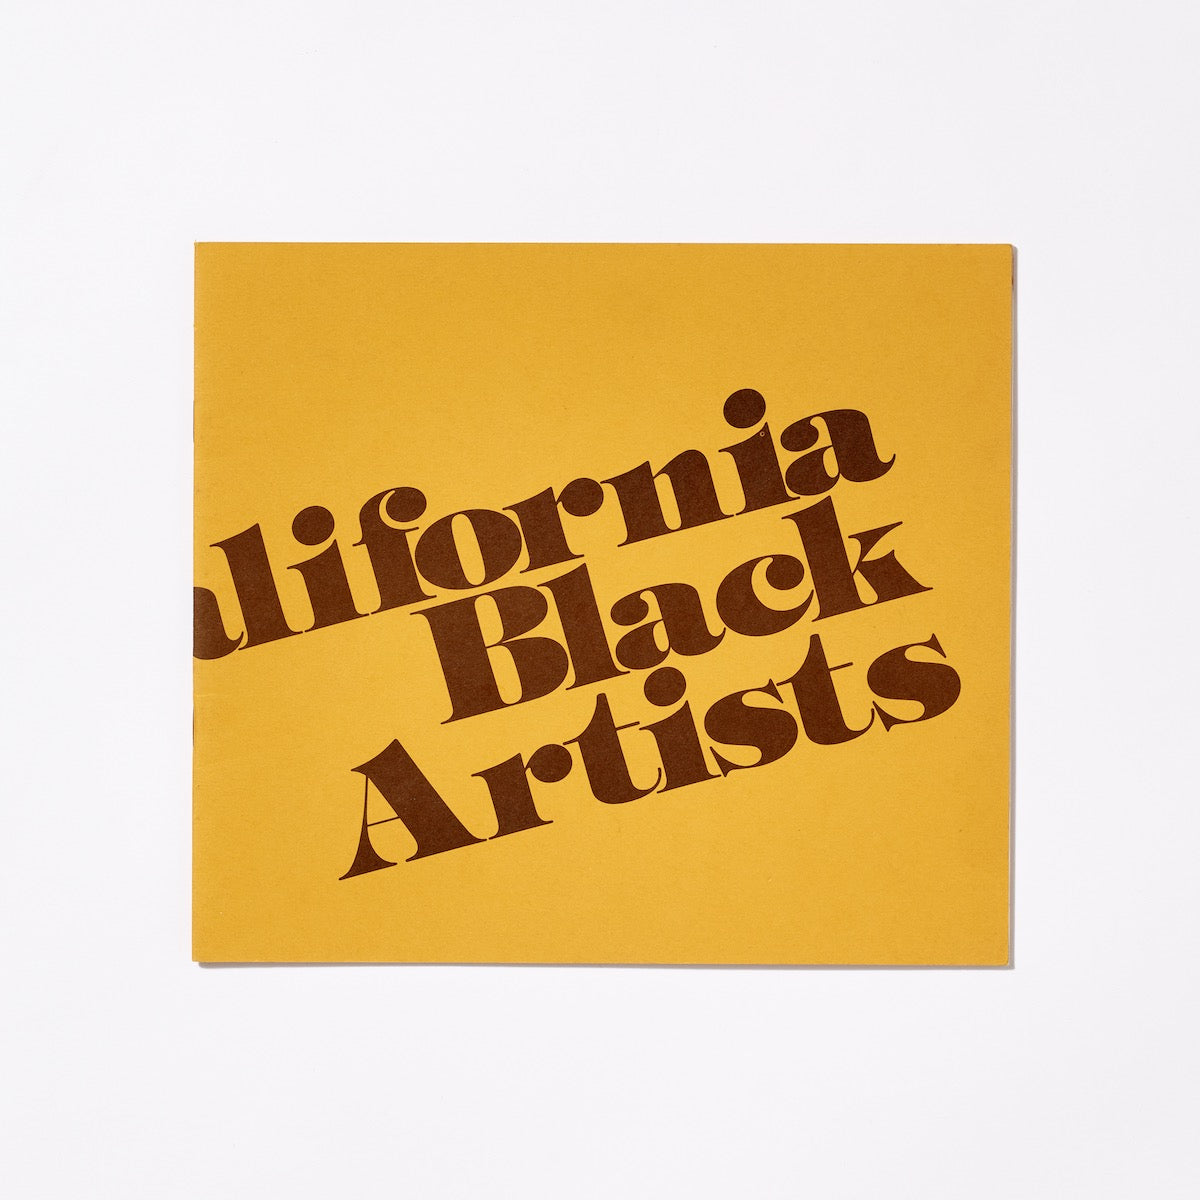 California Black Artists